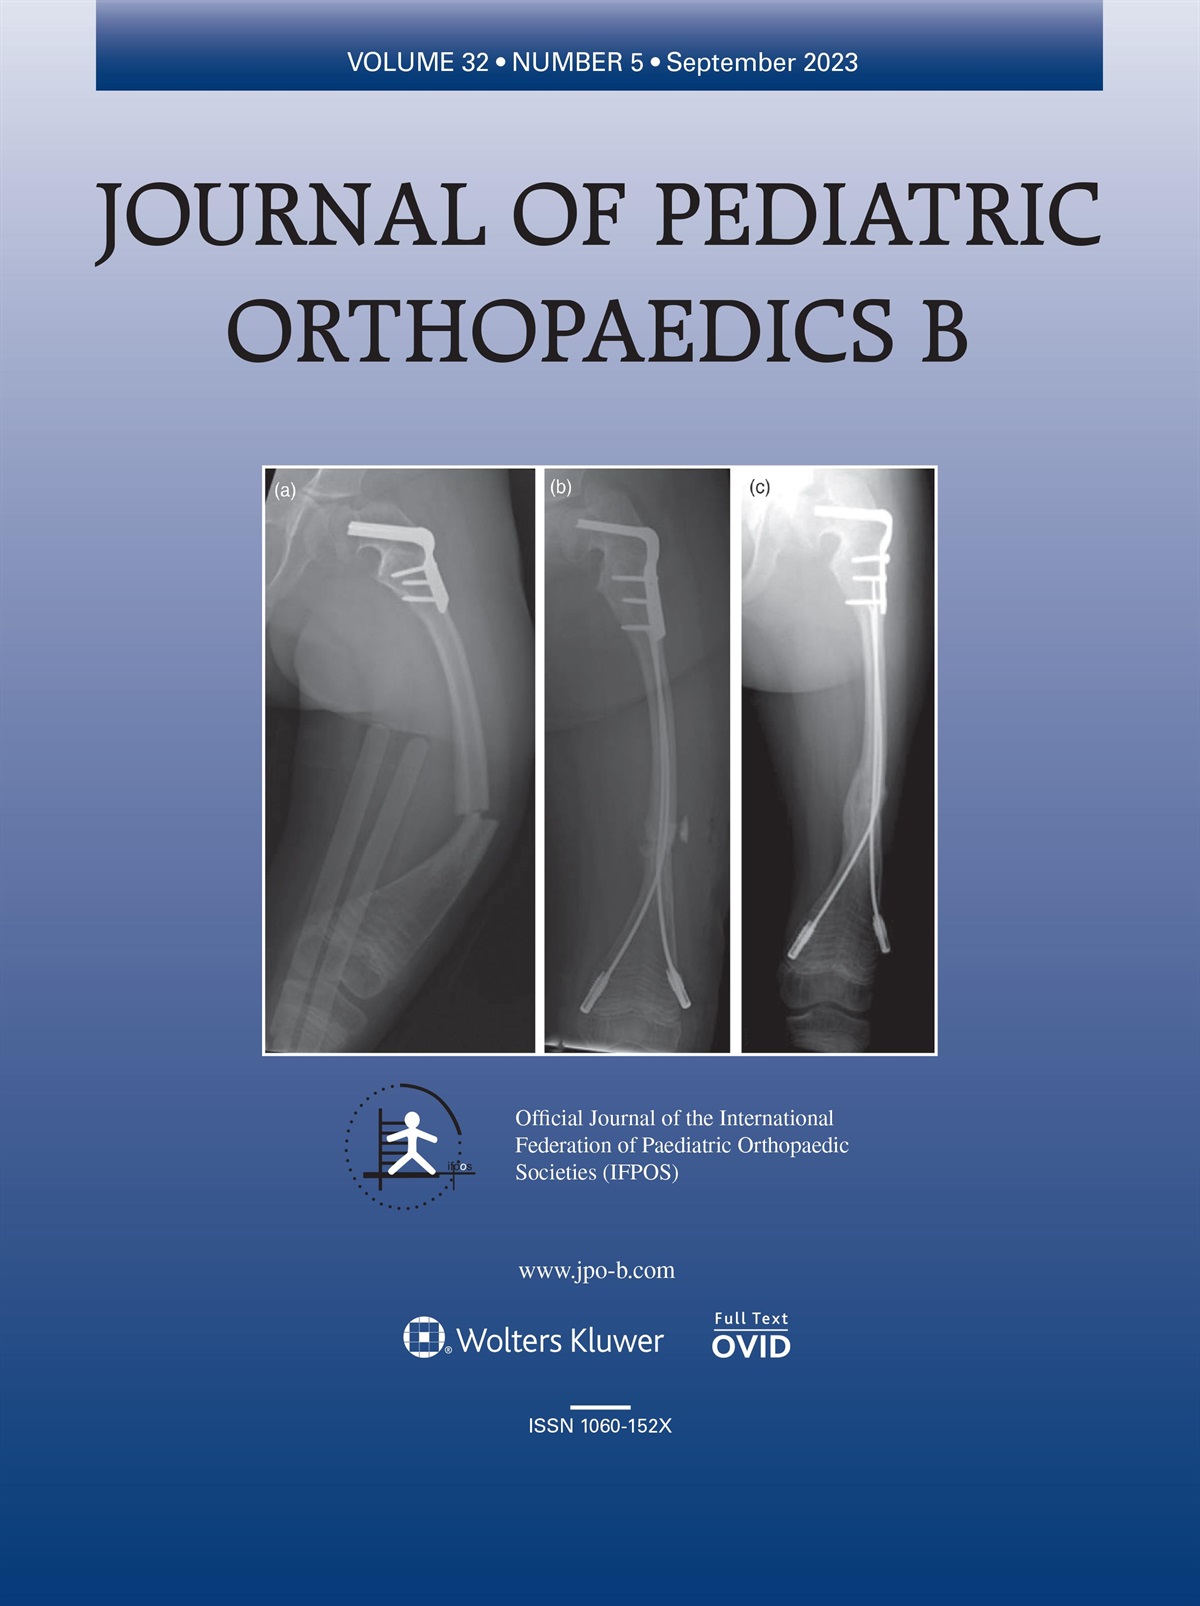 Comment on Cummings JL et al.: ‘Untreated congenital vertical talus deformity in walking age: minimally invasive method works’